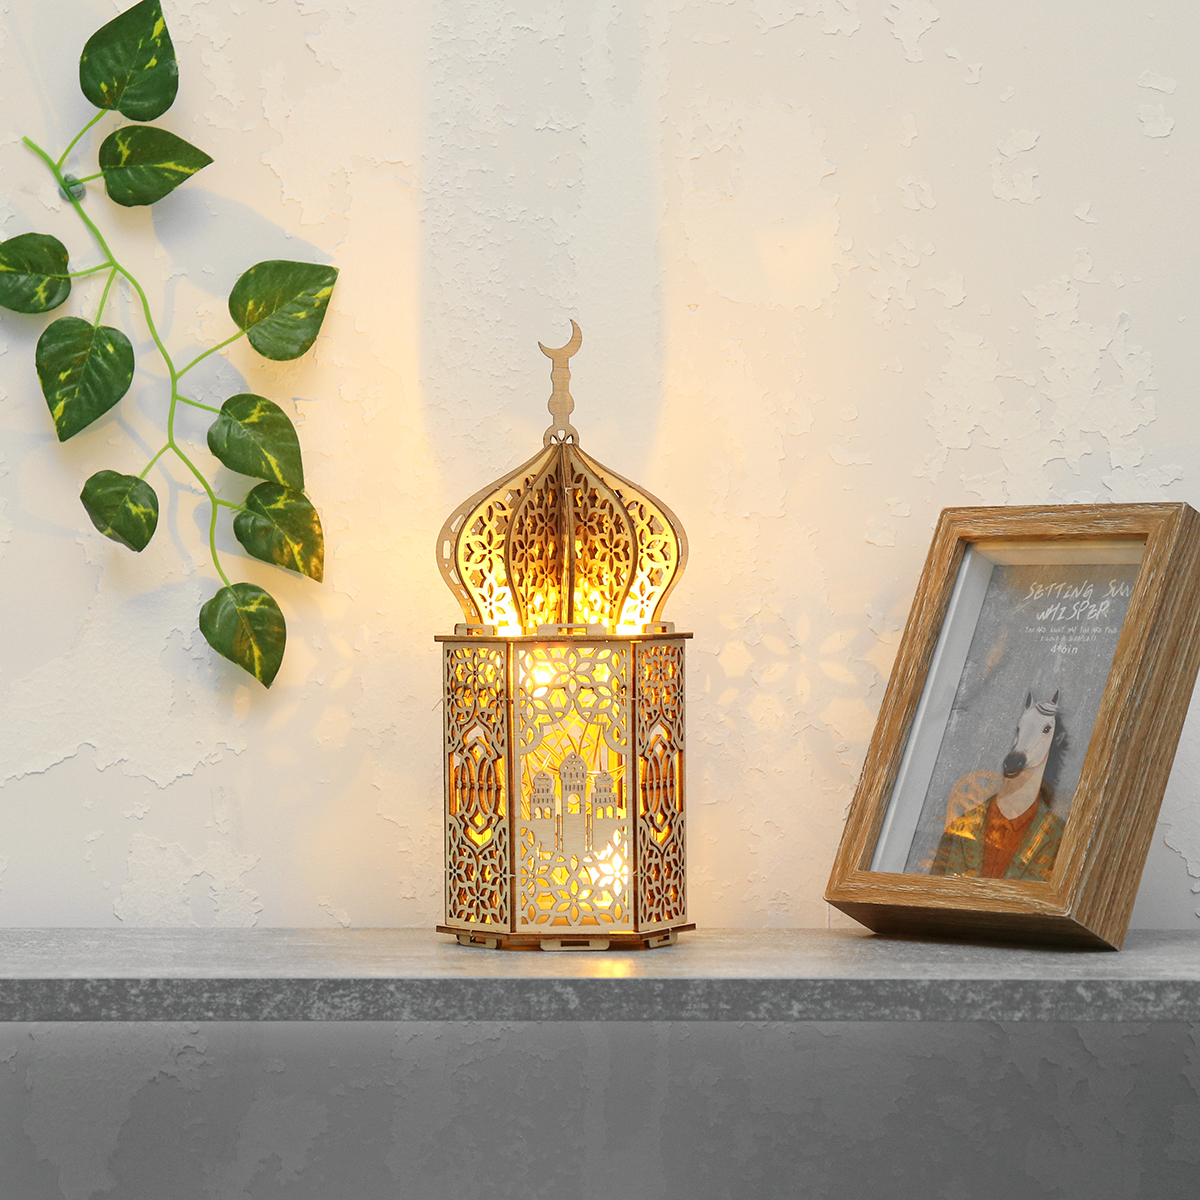 Wooden-Palace-LED-Night-Light-DIY-Eid-Mubarak-Ramadan-Party-Decoration-Ornament-Gifts-1677194-10